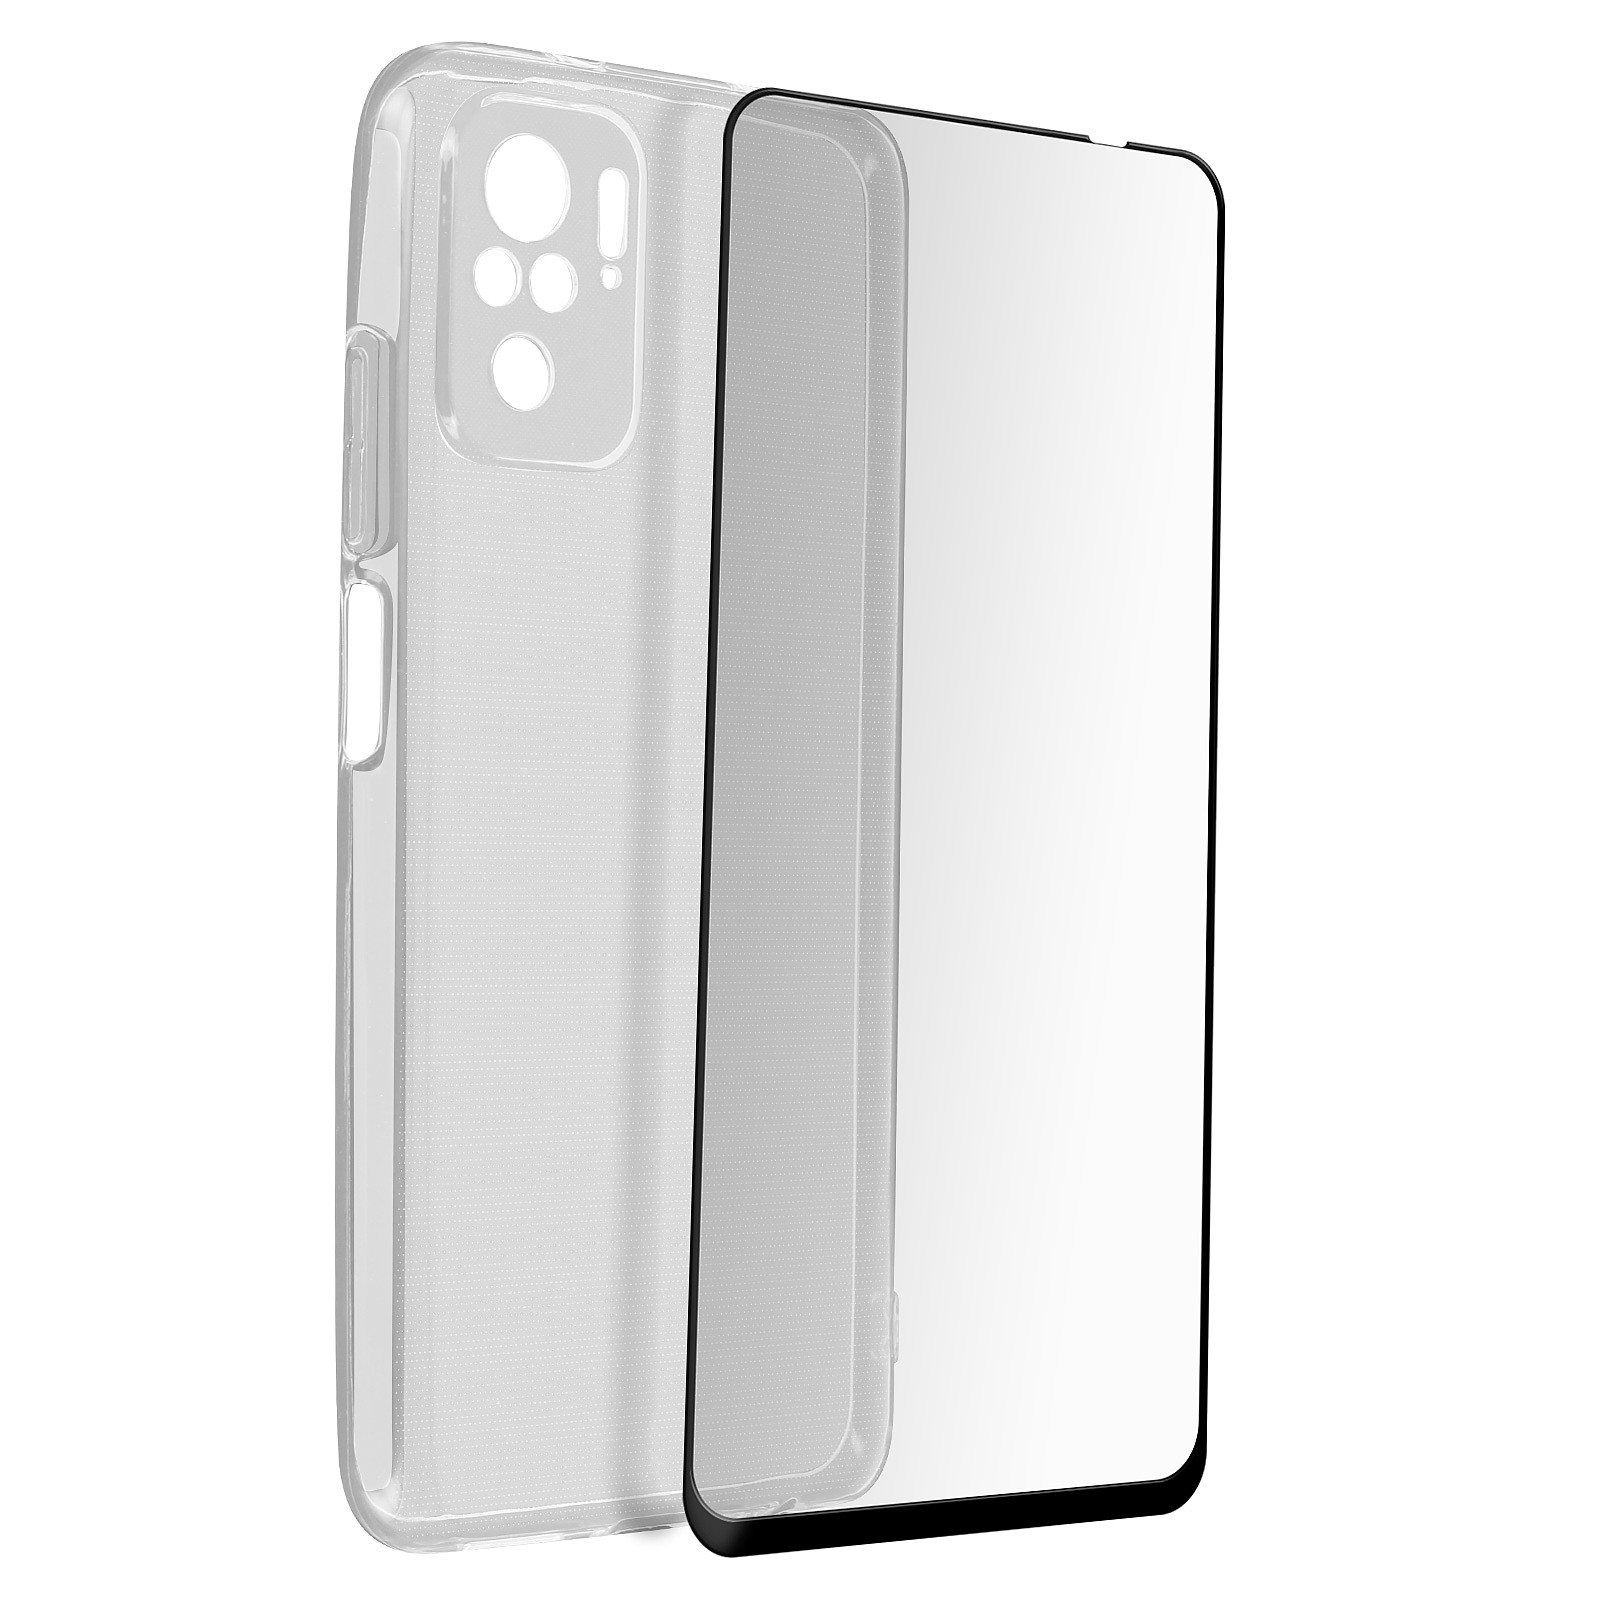 Avizar Coque pour Xiaomi Redmi Note 10s / Note 10 Souple et Film Verre Trempe Durete 9H Transparent Noir - Coque telephone Avizar